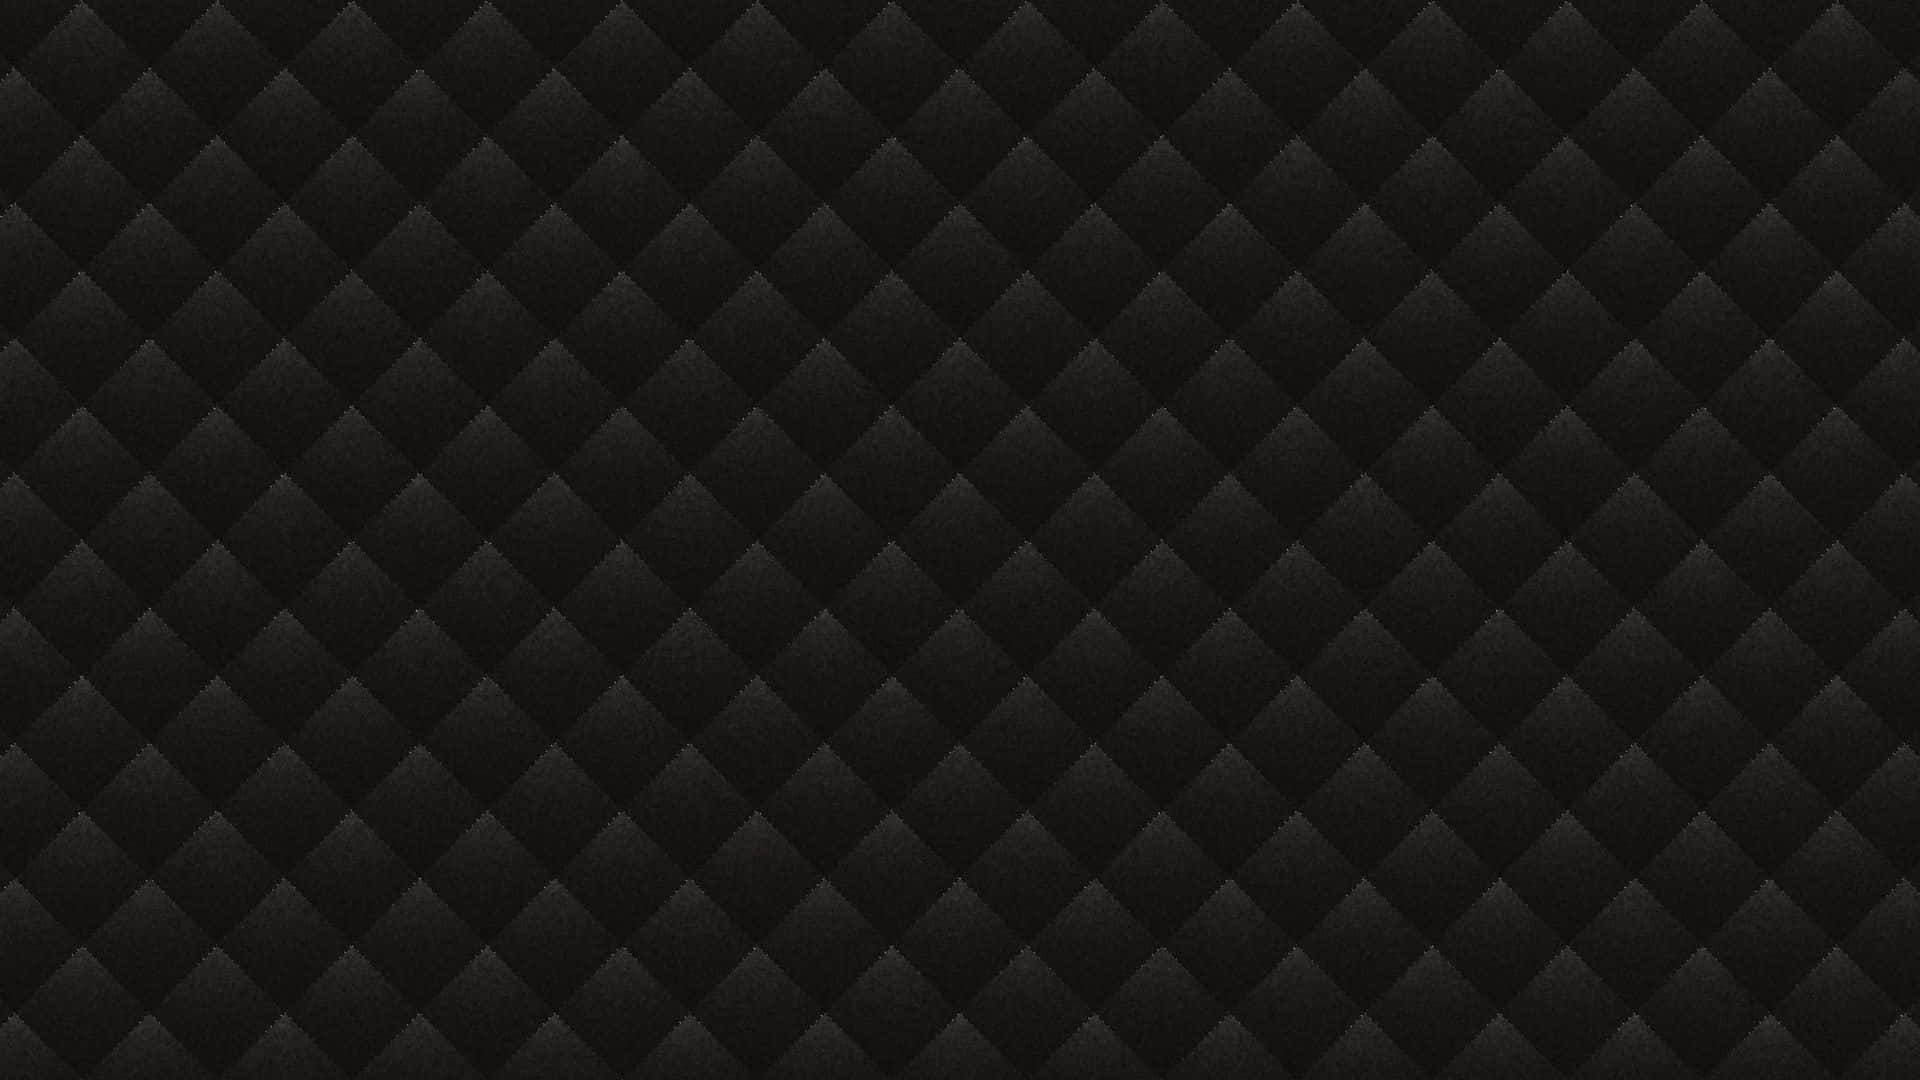 Quilted Pattern Design Black Background